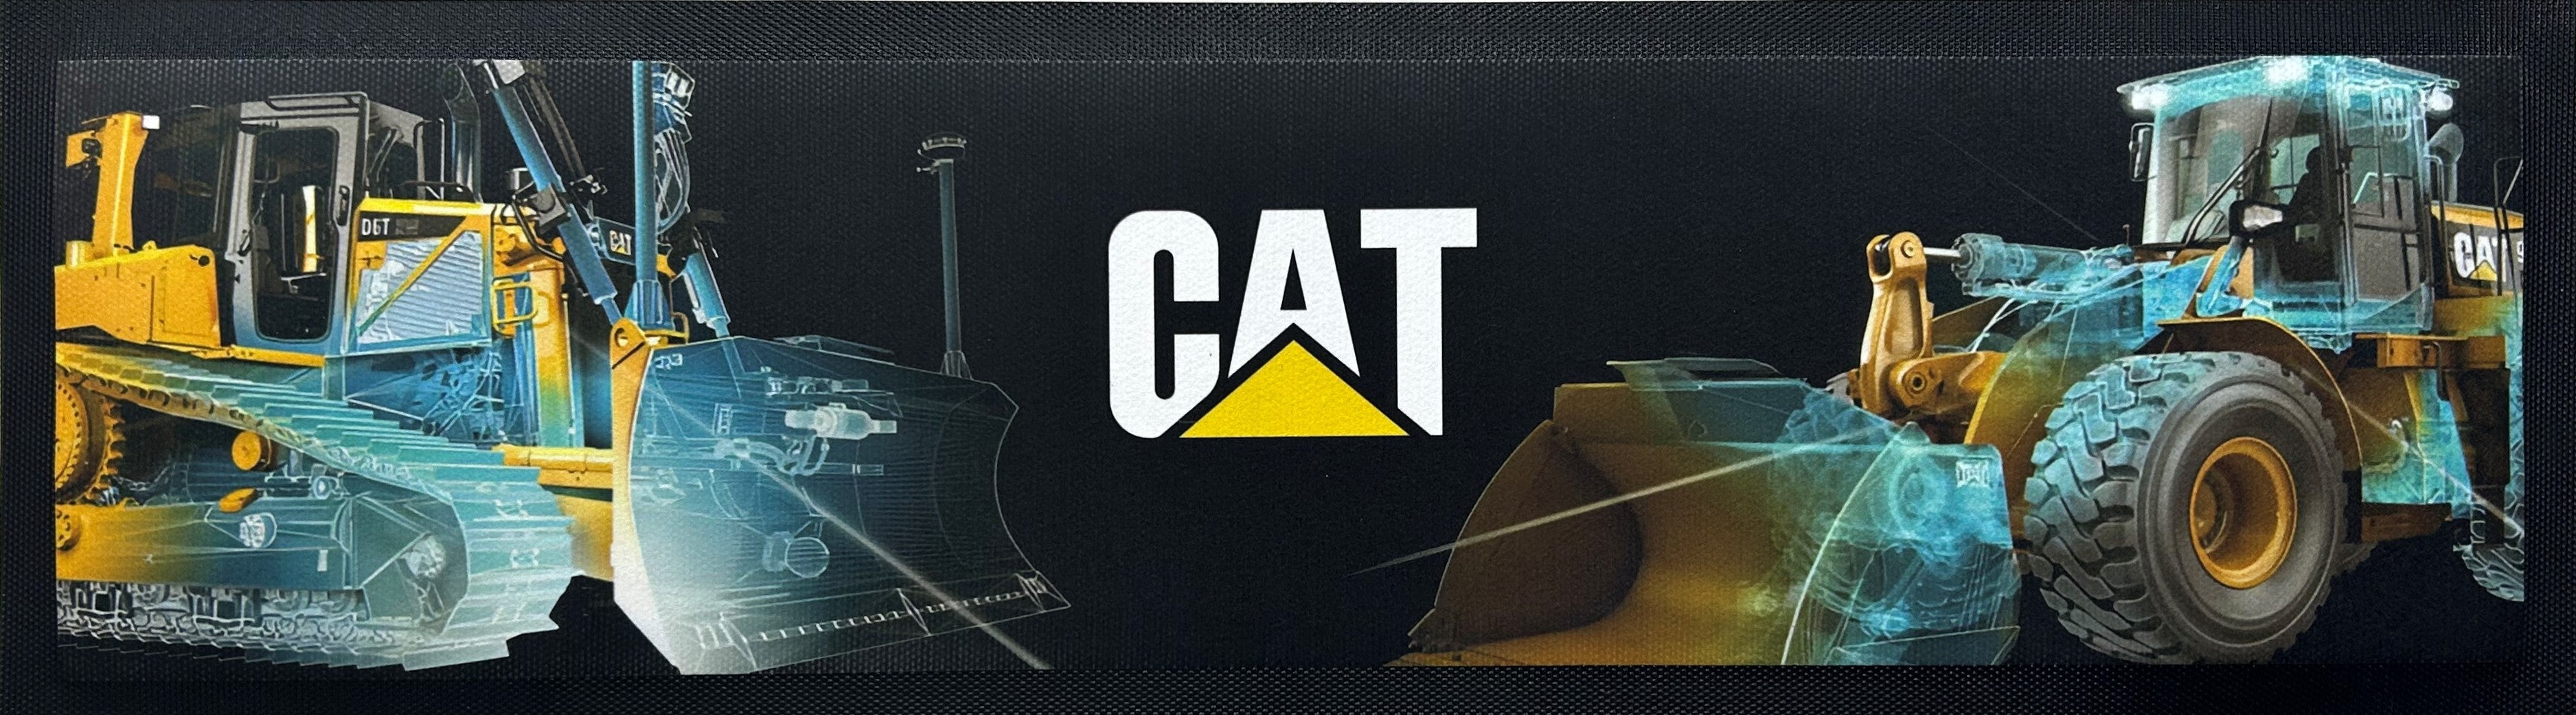 Caterpillar CAT Diggers Premium Rubber-Backed Bar Mat Runner - KING CAVE